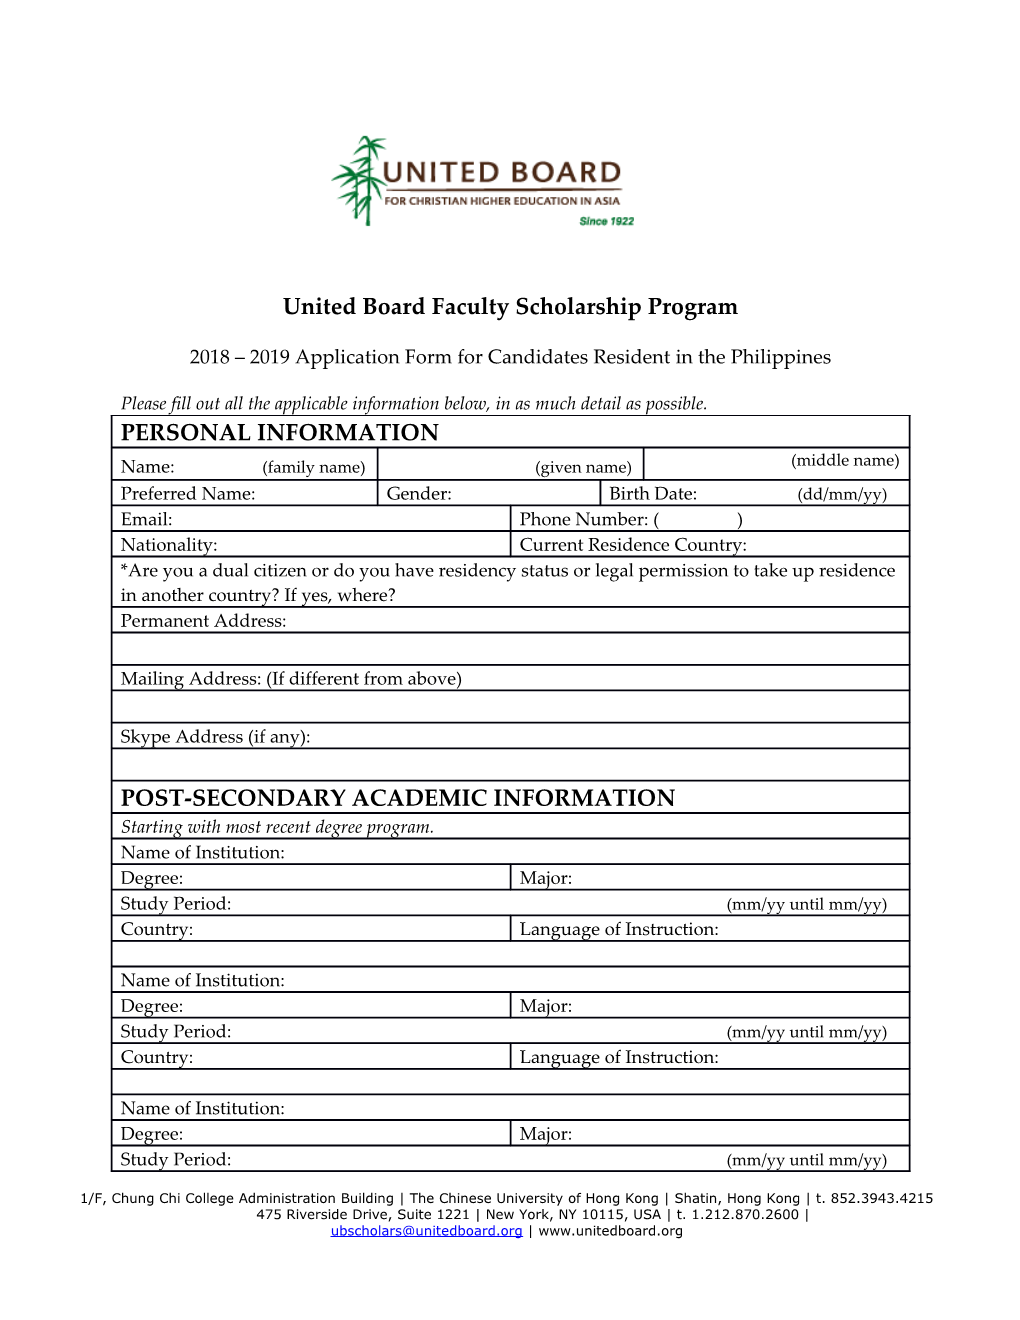 United Board Faculty Scholarship Program